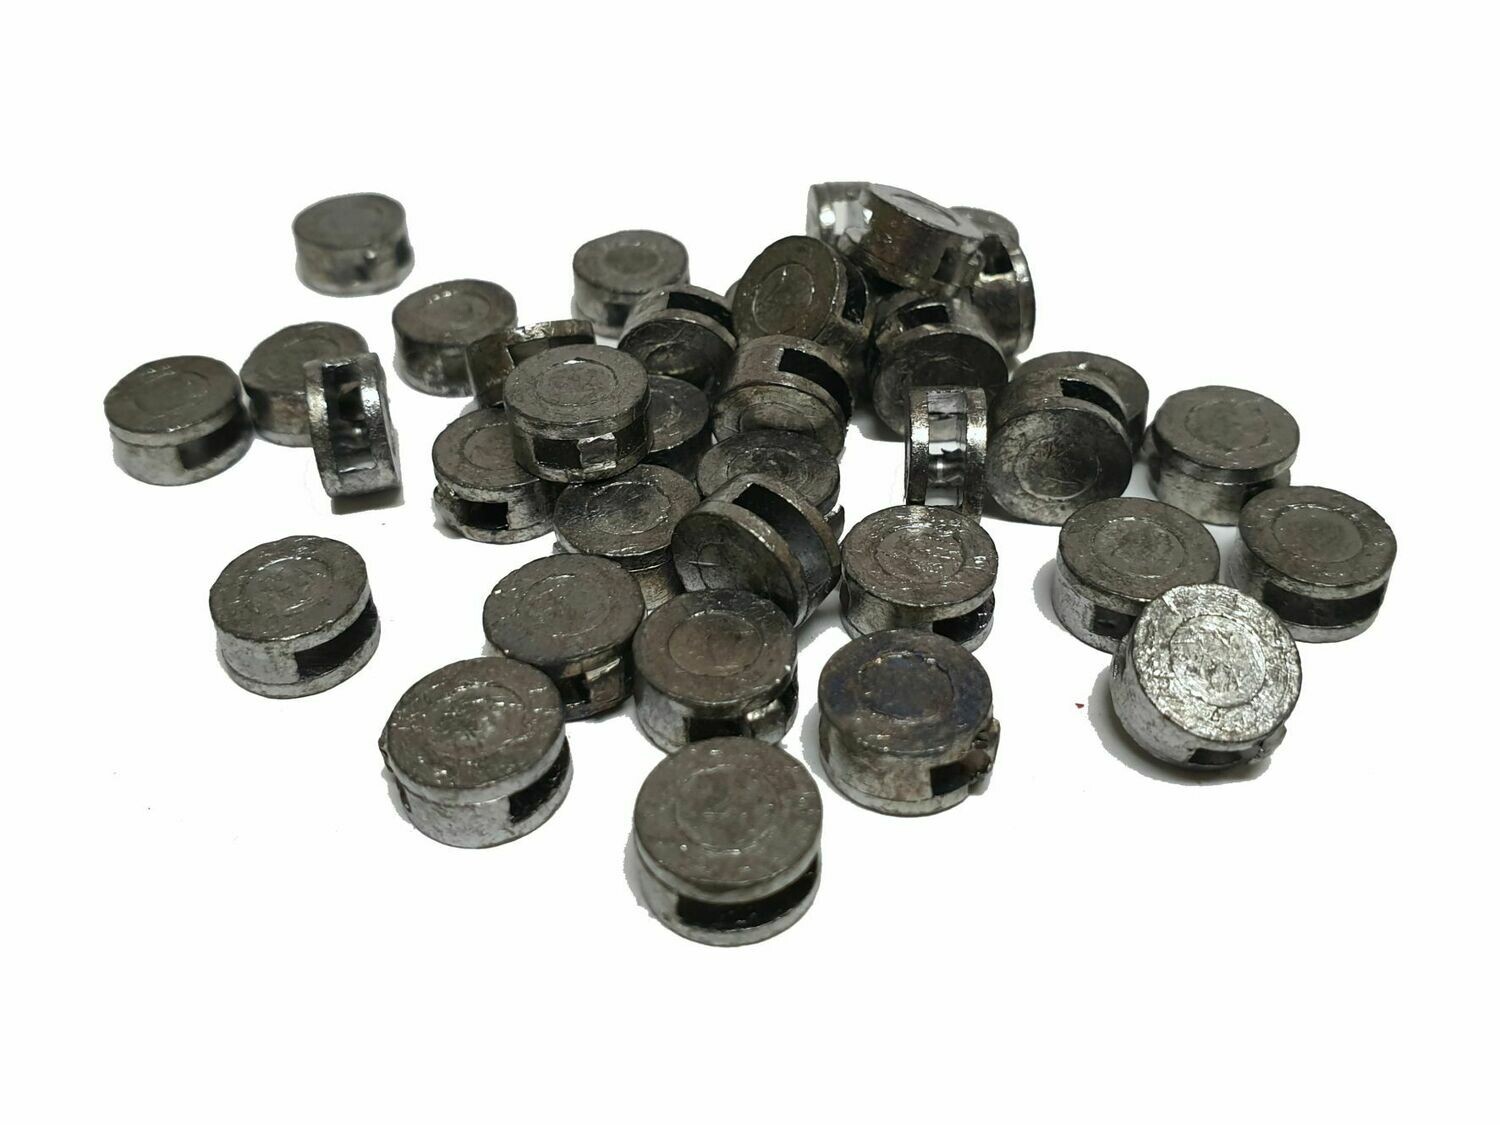 Lead seals 9 mm diameter